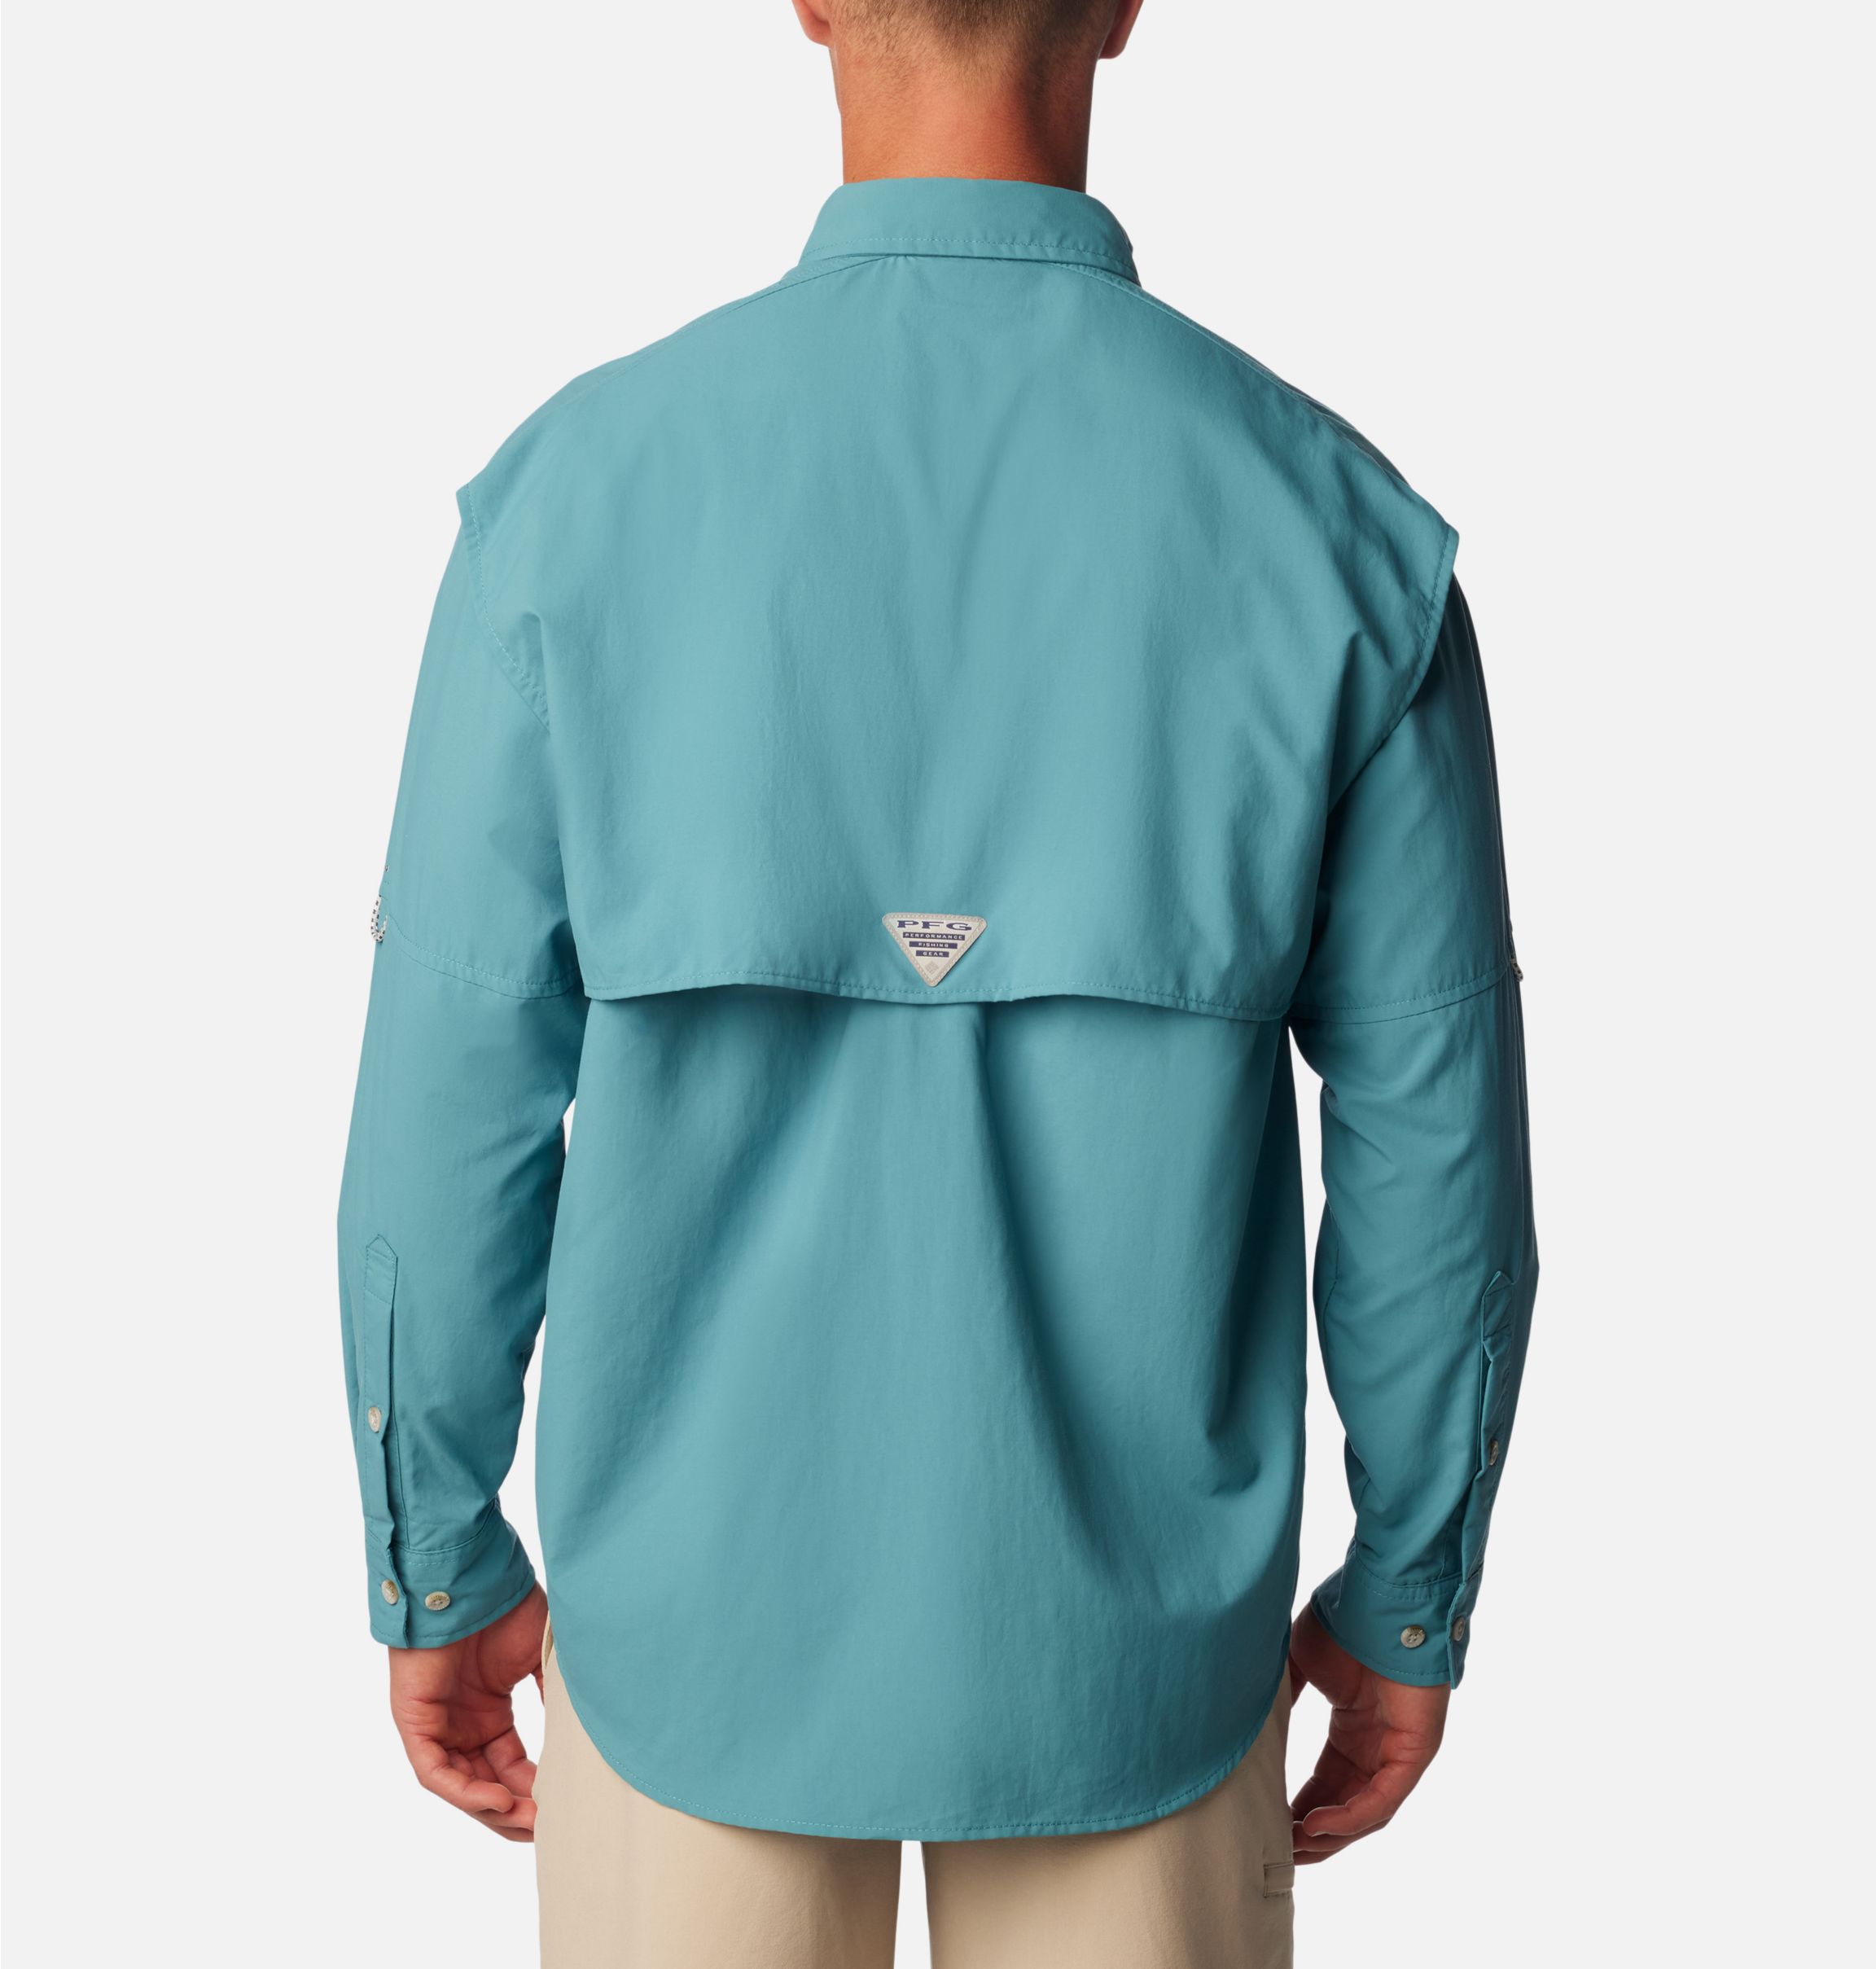 Simms Fishing Shirt Men's XXLT 2XLT Blue Long Sleeve Quick Dry